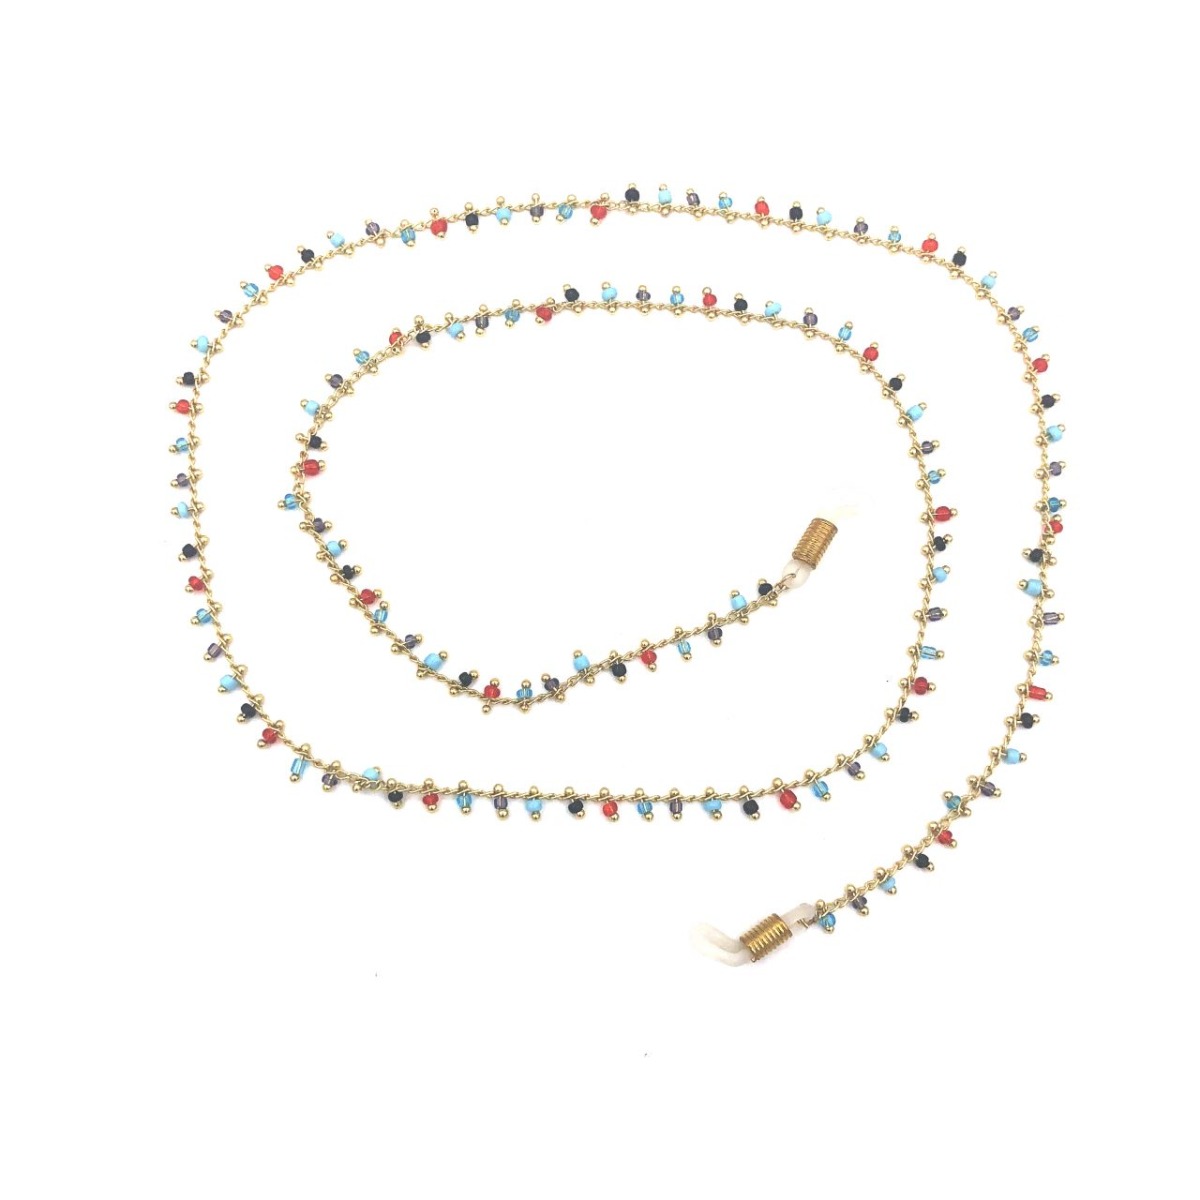 Boho Beach Sunny Necklace - Colourful Stones Mix Chain